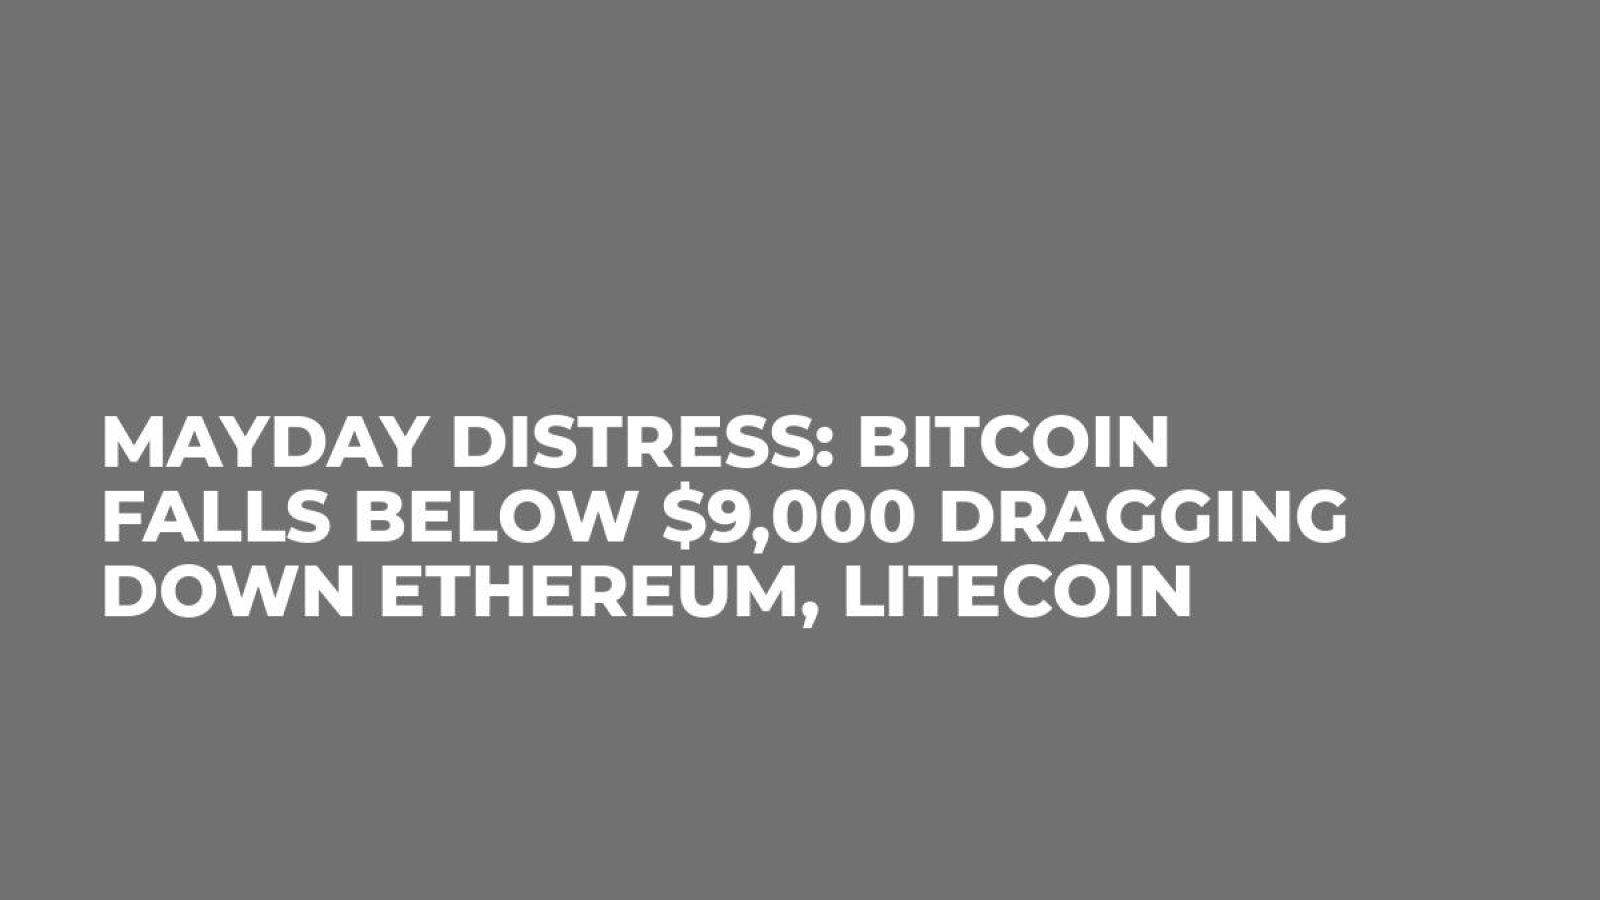 Mayday Distress: Bitcoin Falls Below $9,000 Dragging Down Ethereum, Litecoin